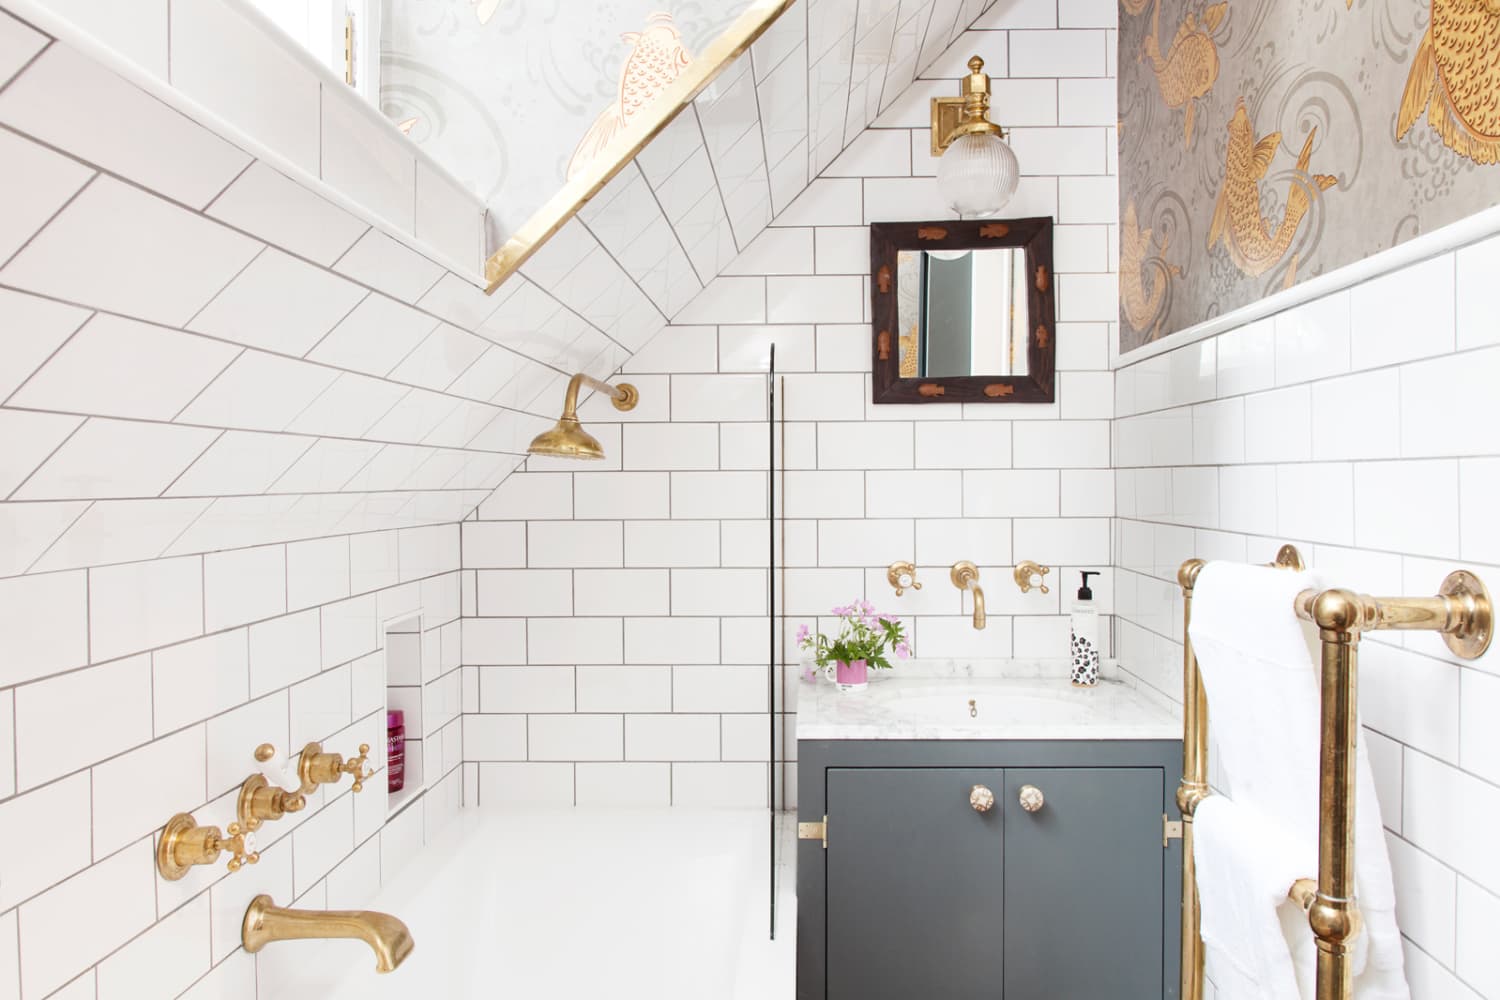 50 Best Small Bathroom Decorating Ideas – Tiny Bathroom Layout & Decor Tips